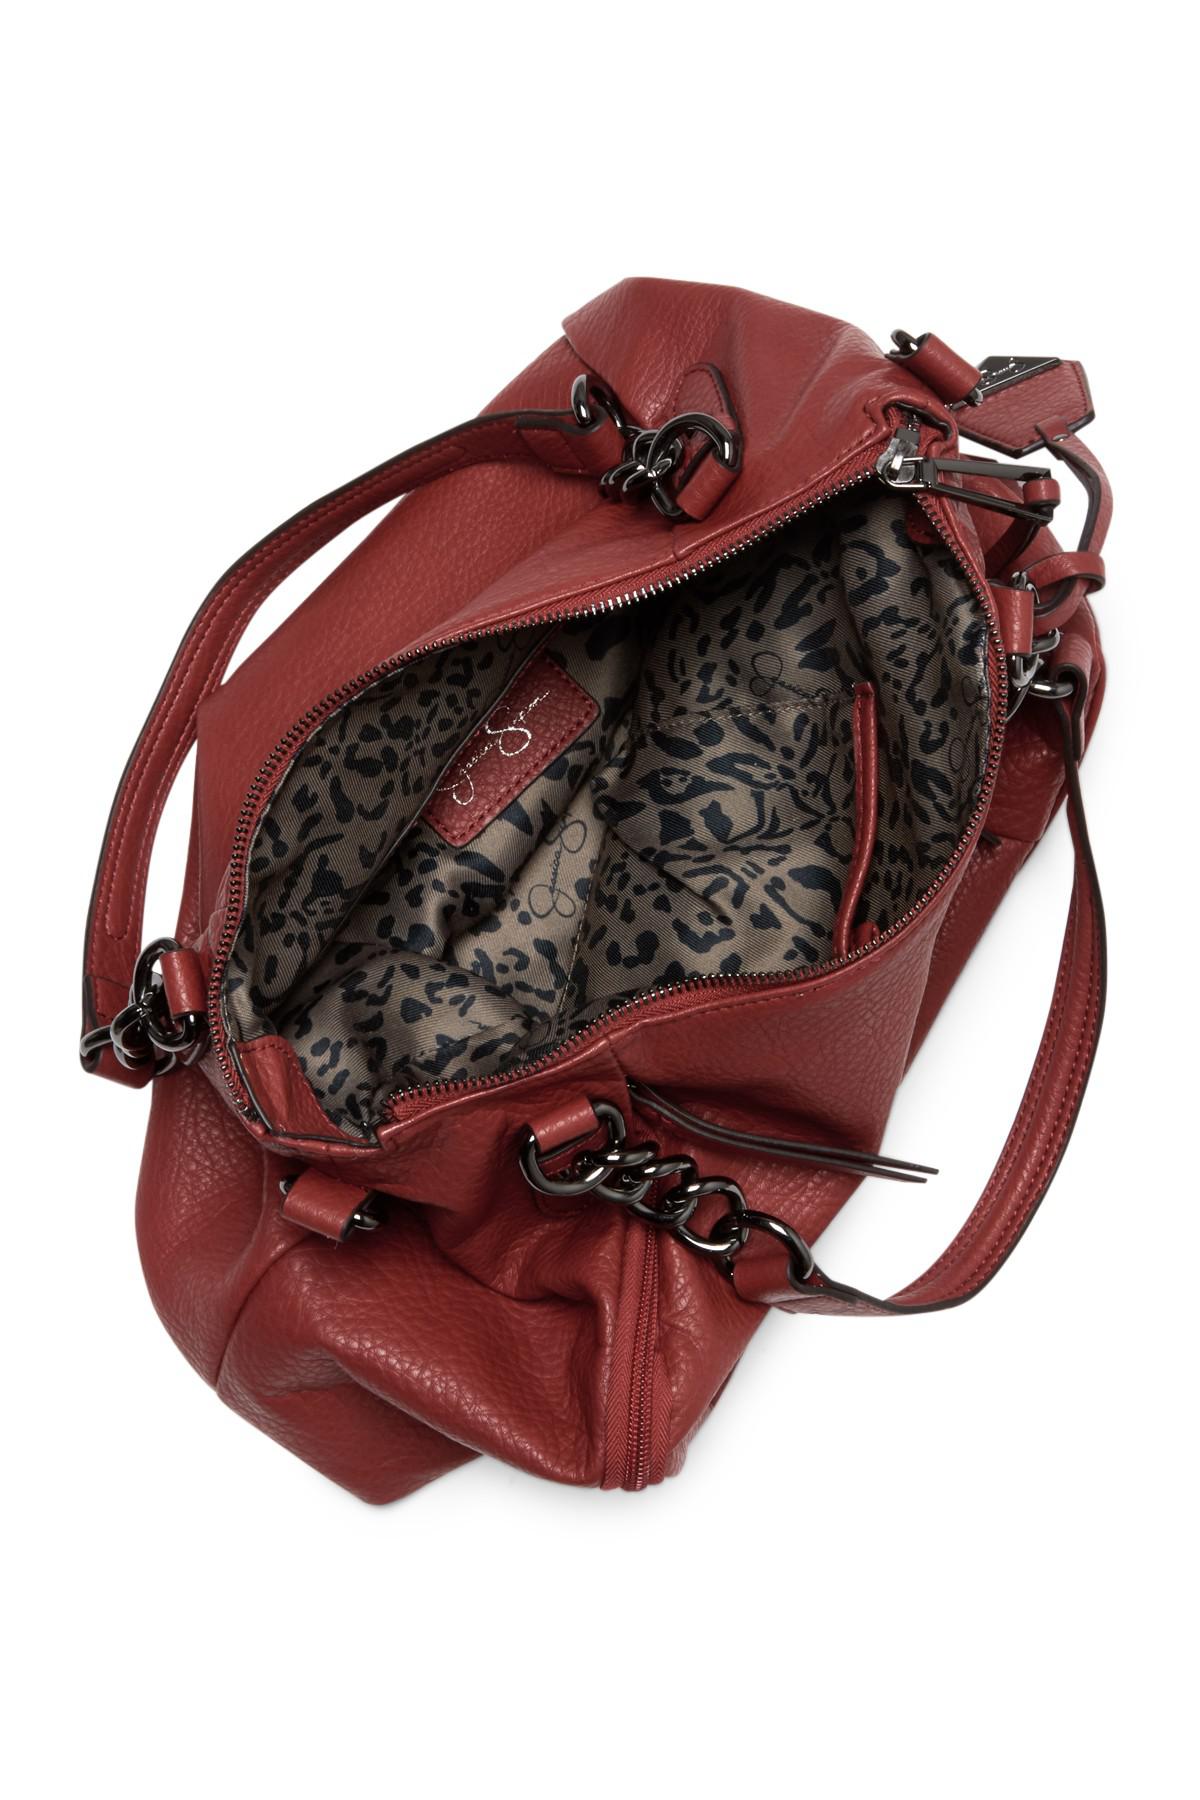 Jessica Simpson | Bags | Black Leather Bnwt Jessica Simpson Handbag |  Poshmark